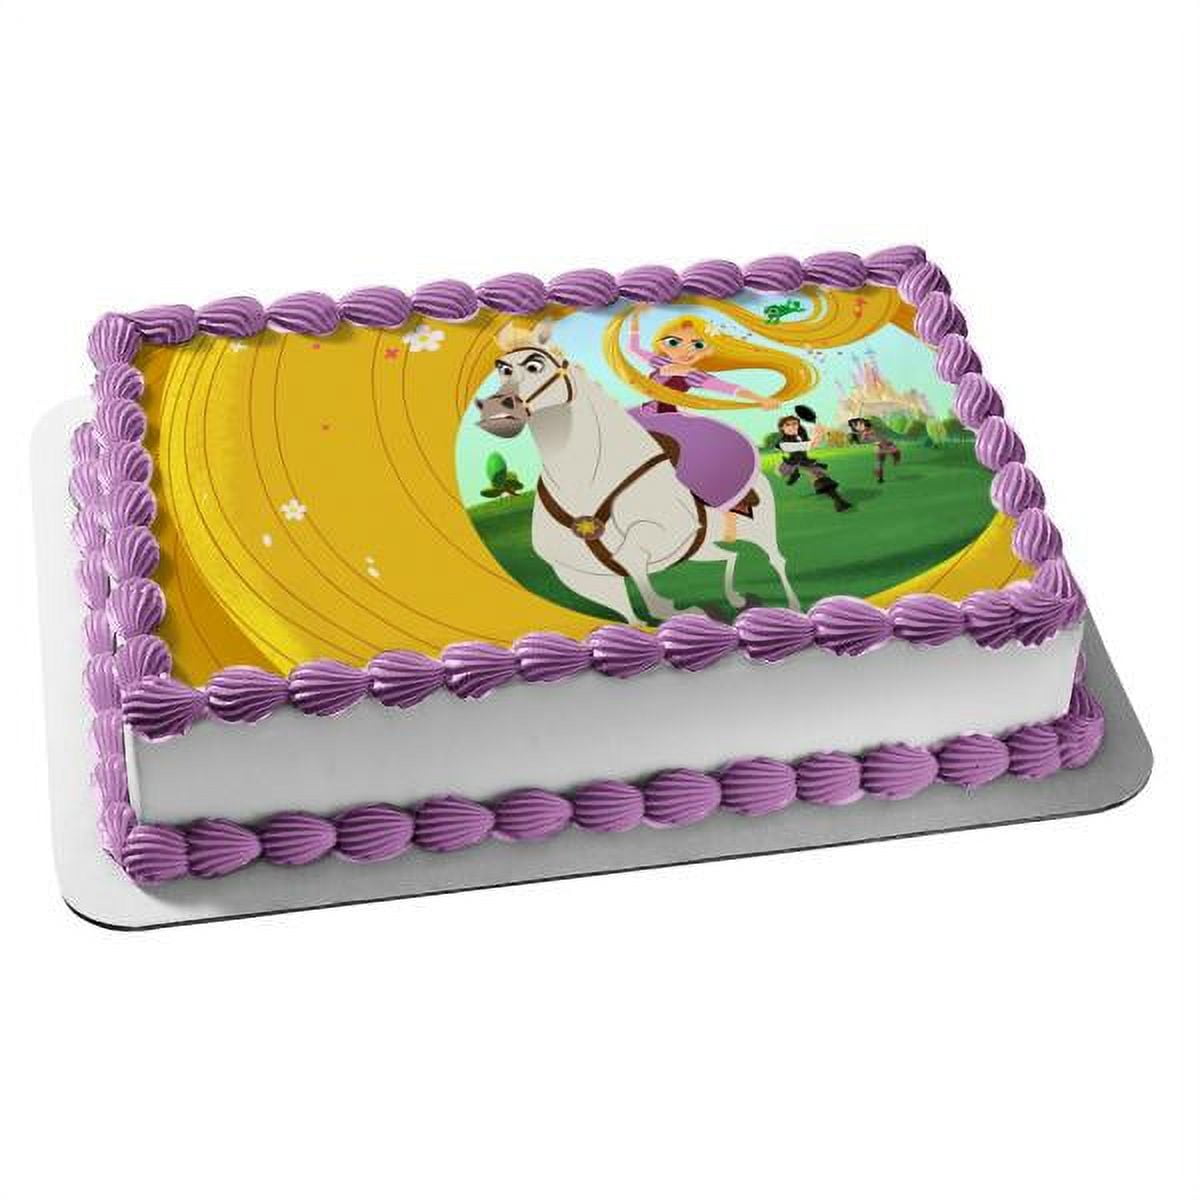 Order Now Rapunzel Cake | Order Quick Delivery | Online Cake Delivery |  Order Now | The French Cake Company